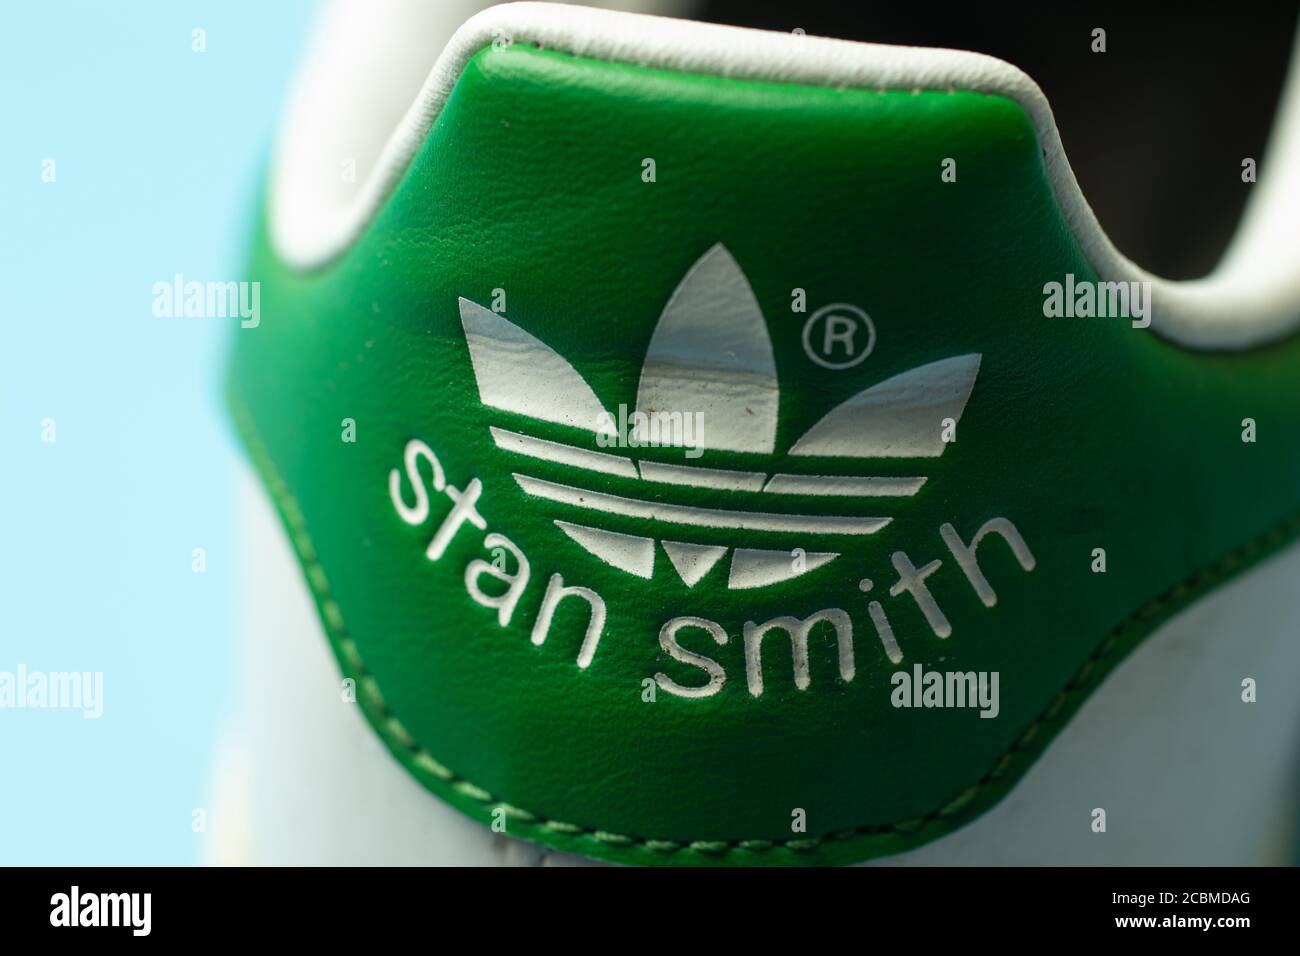 Moscou, Russie - 1er juin 2020: Adidas Originals Stan Smith logo gros plan, montage illustratif Banque D'Images